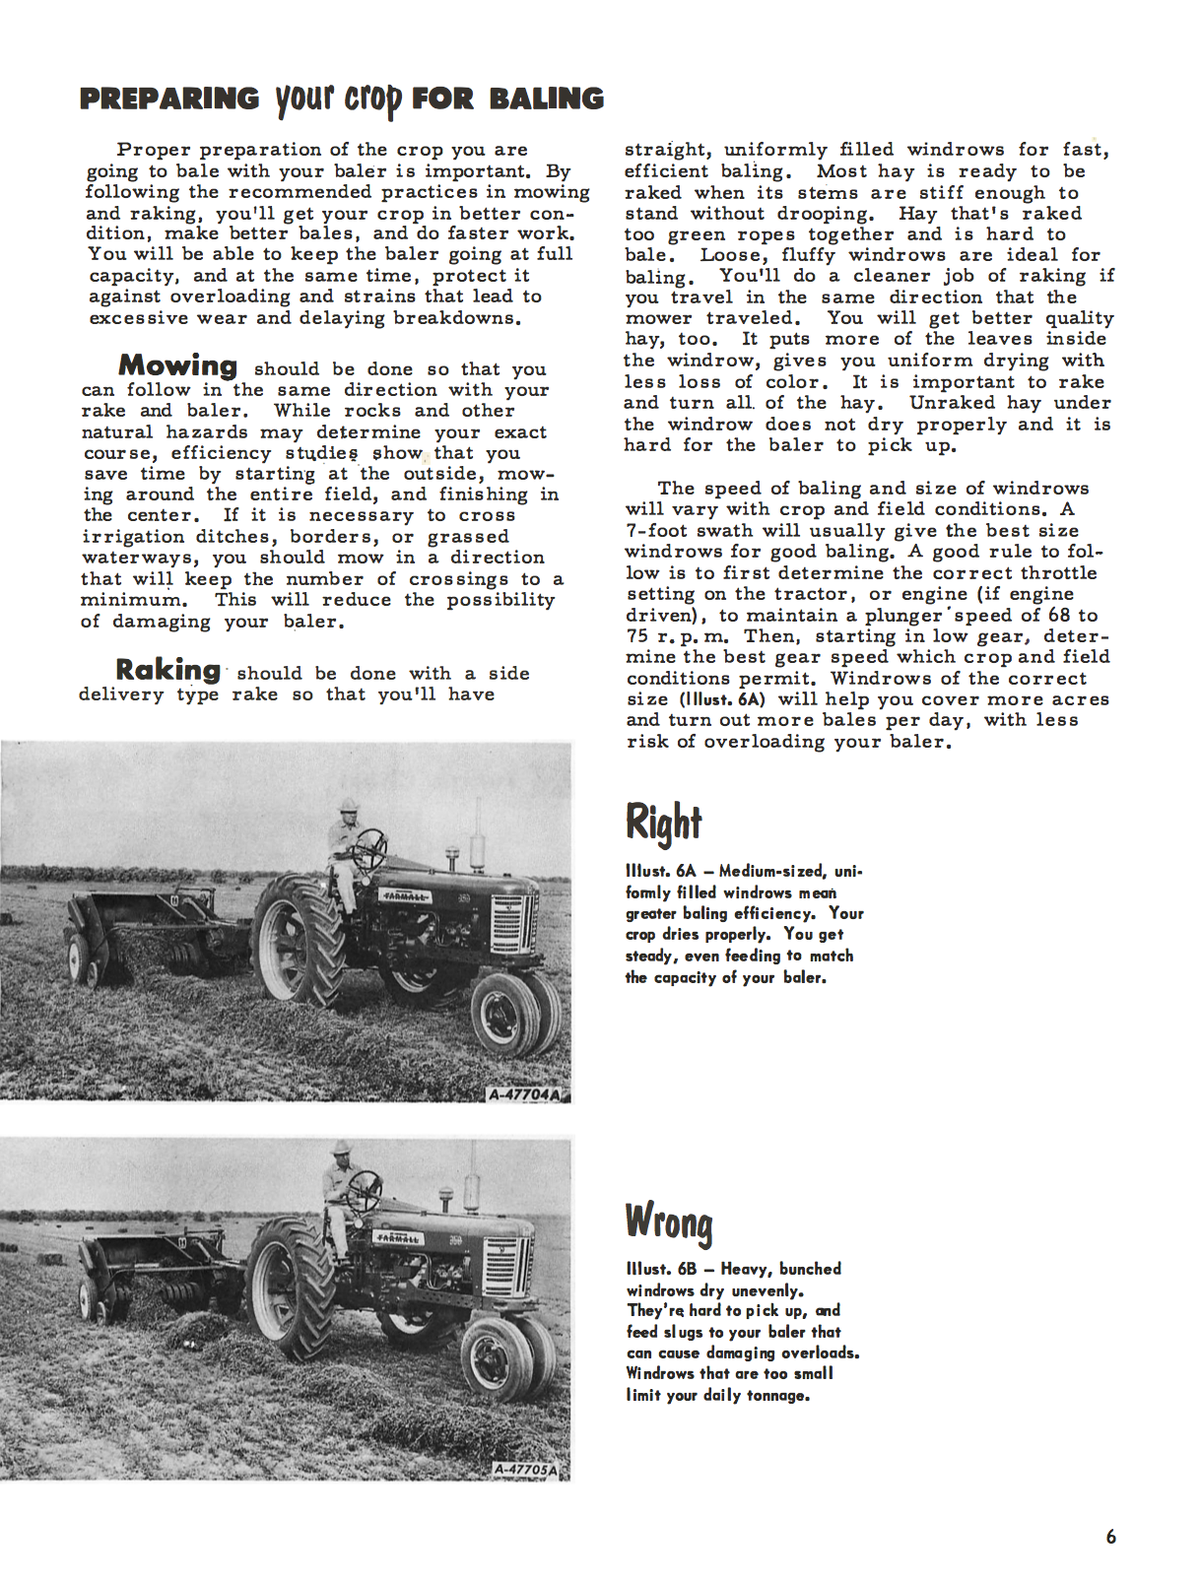 International Harvester McCormick 46 Twine Baler - Operator's Manual - Ag Manuals - A Provider of Digital Farm Manuals - 2